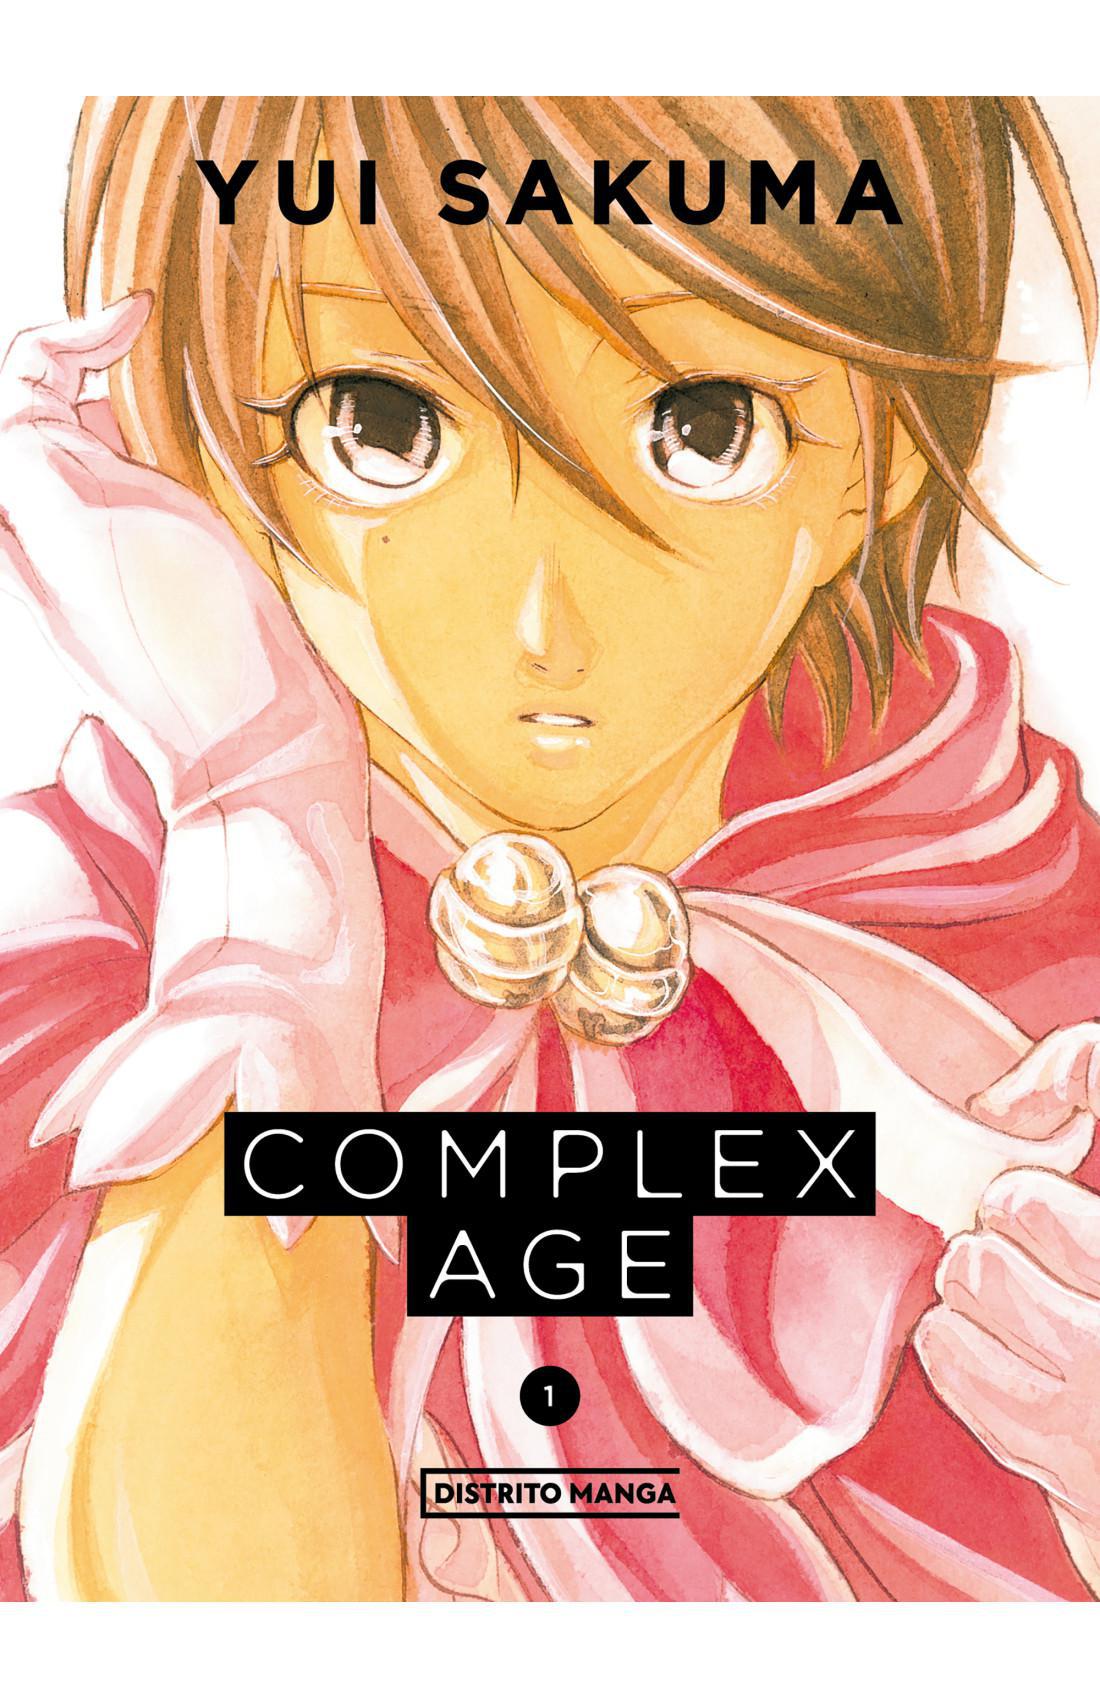 Complex Age 1 - Yui Sakuma